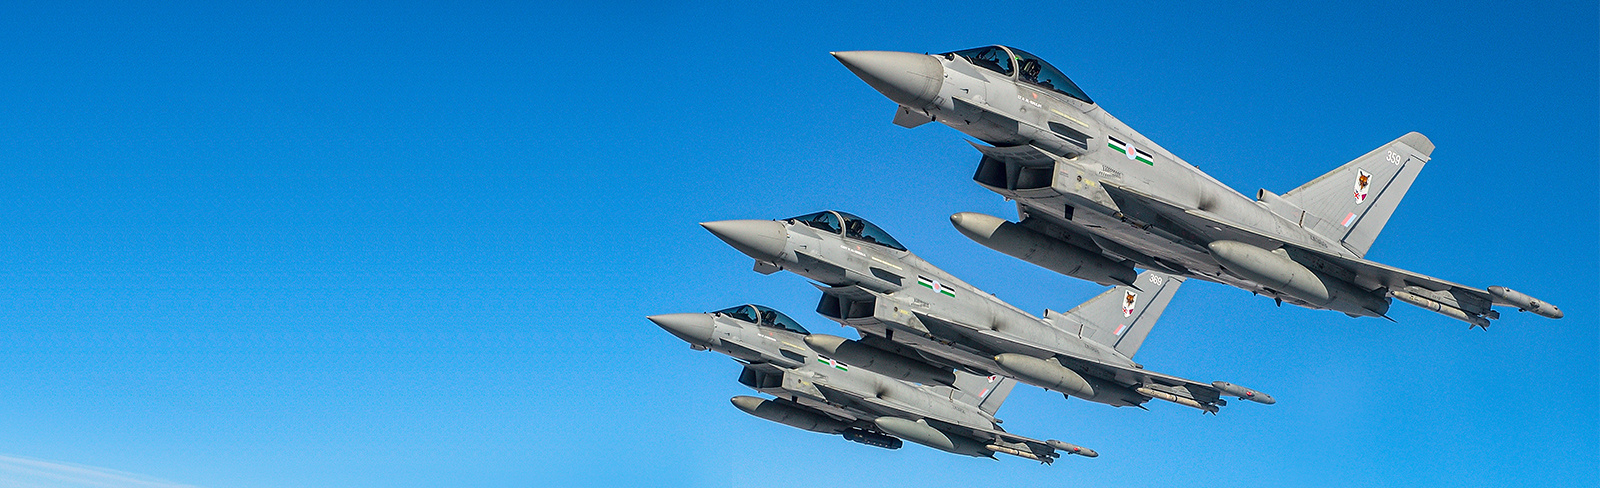 Three Eurofighter Typhoons in flight